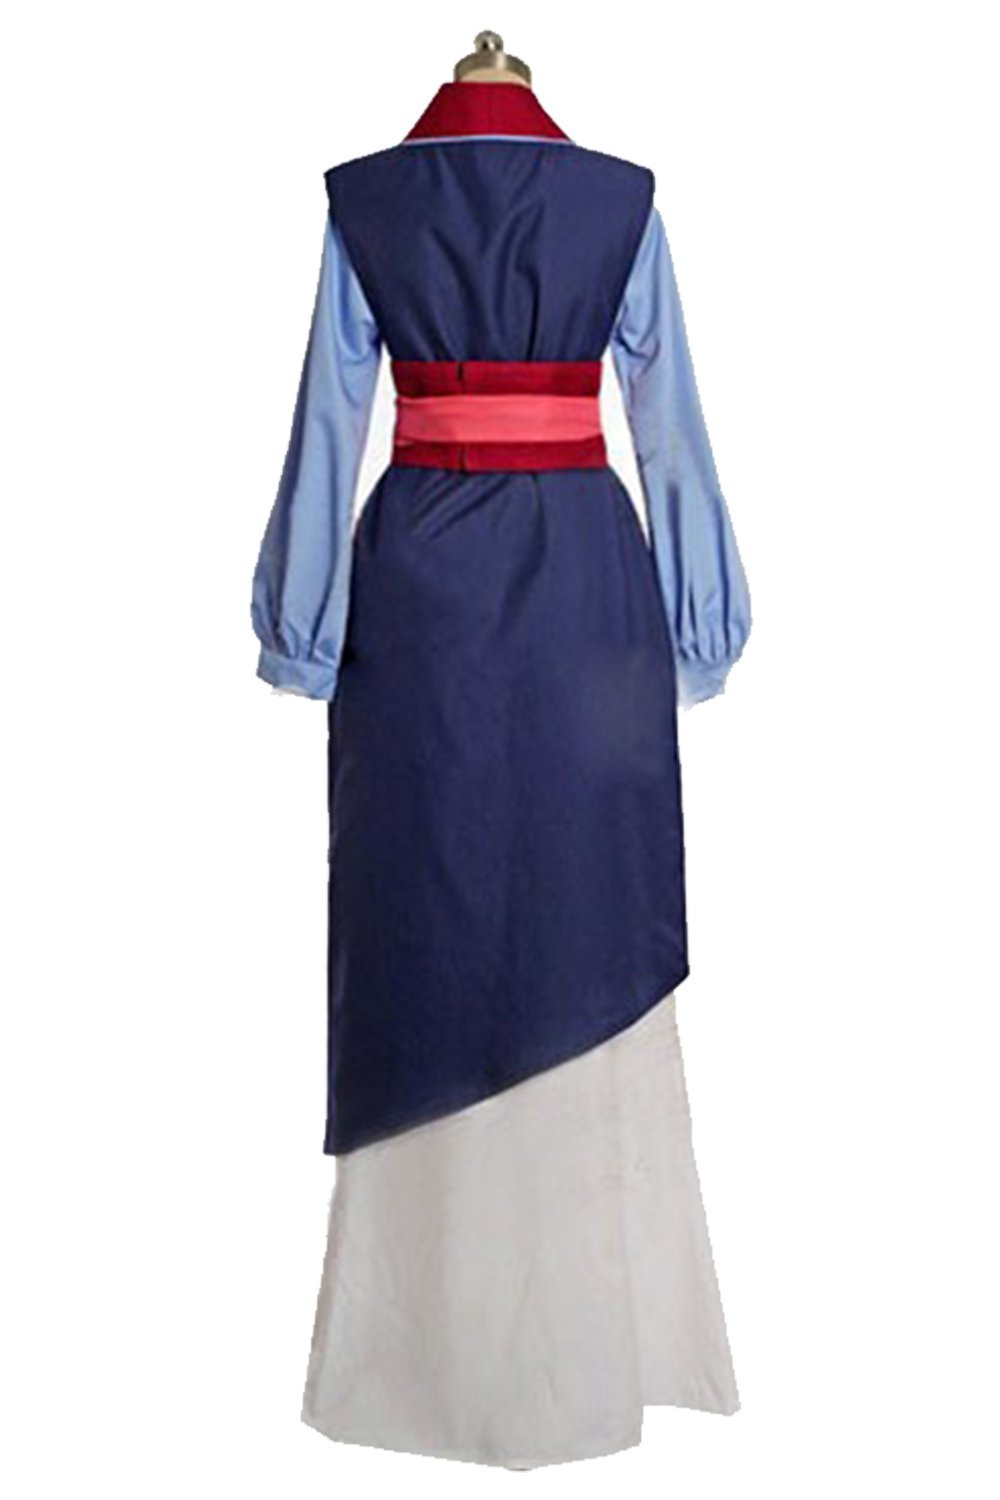 Mulan Hua Mulan Cosplay Costume Chinese Traditional Dress